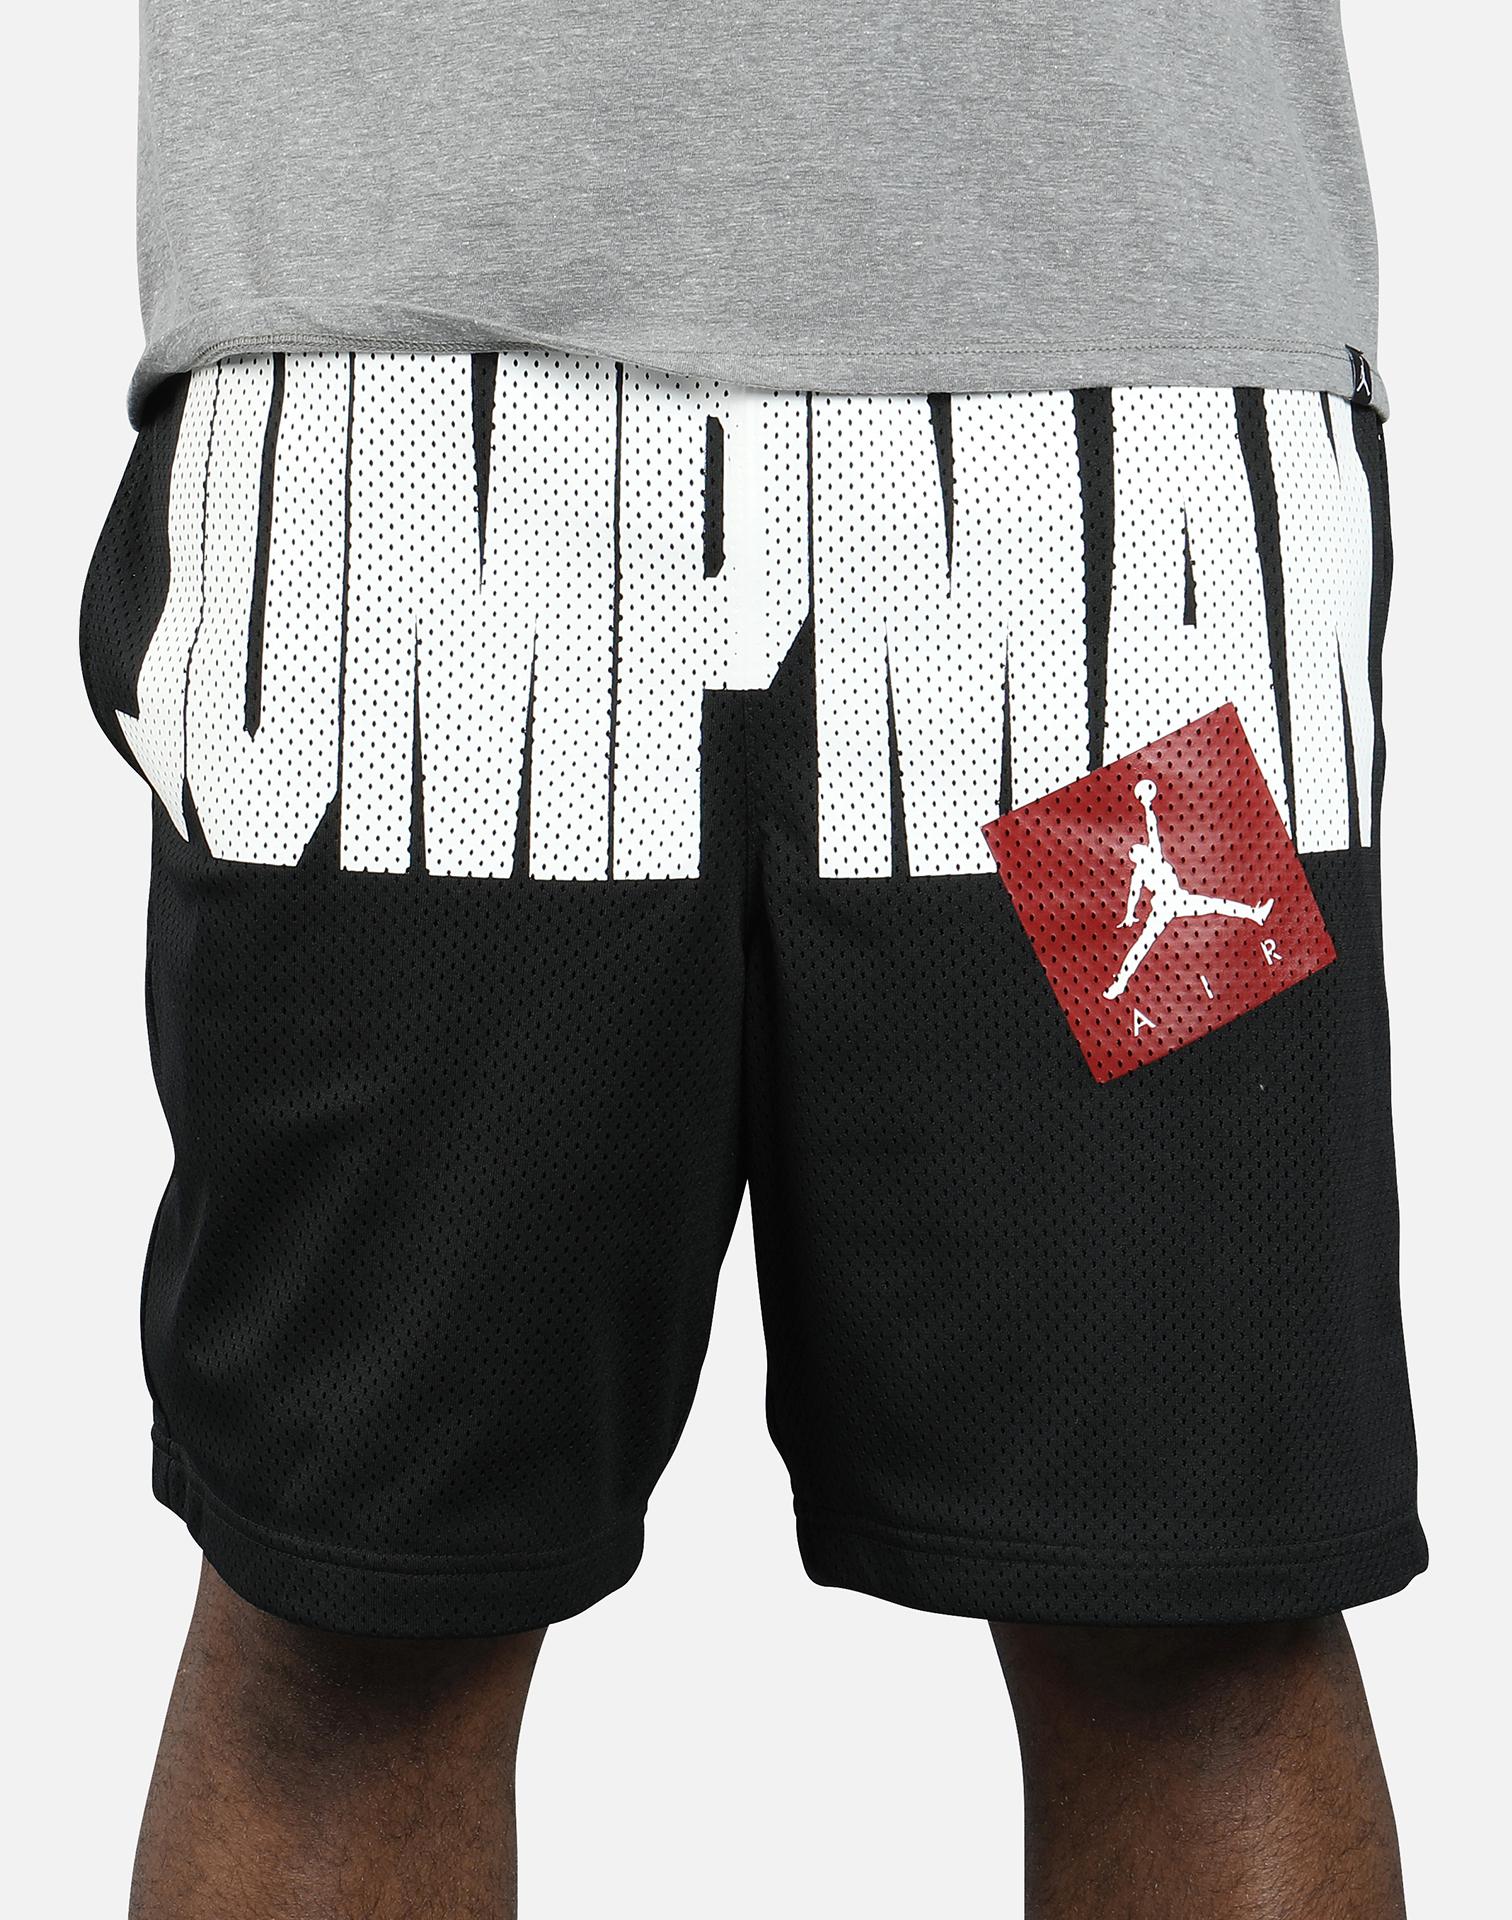 jumpman mesh shorts